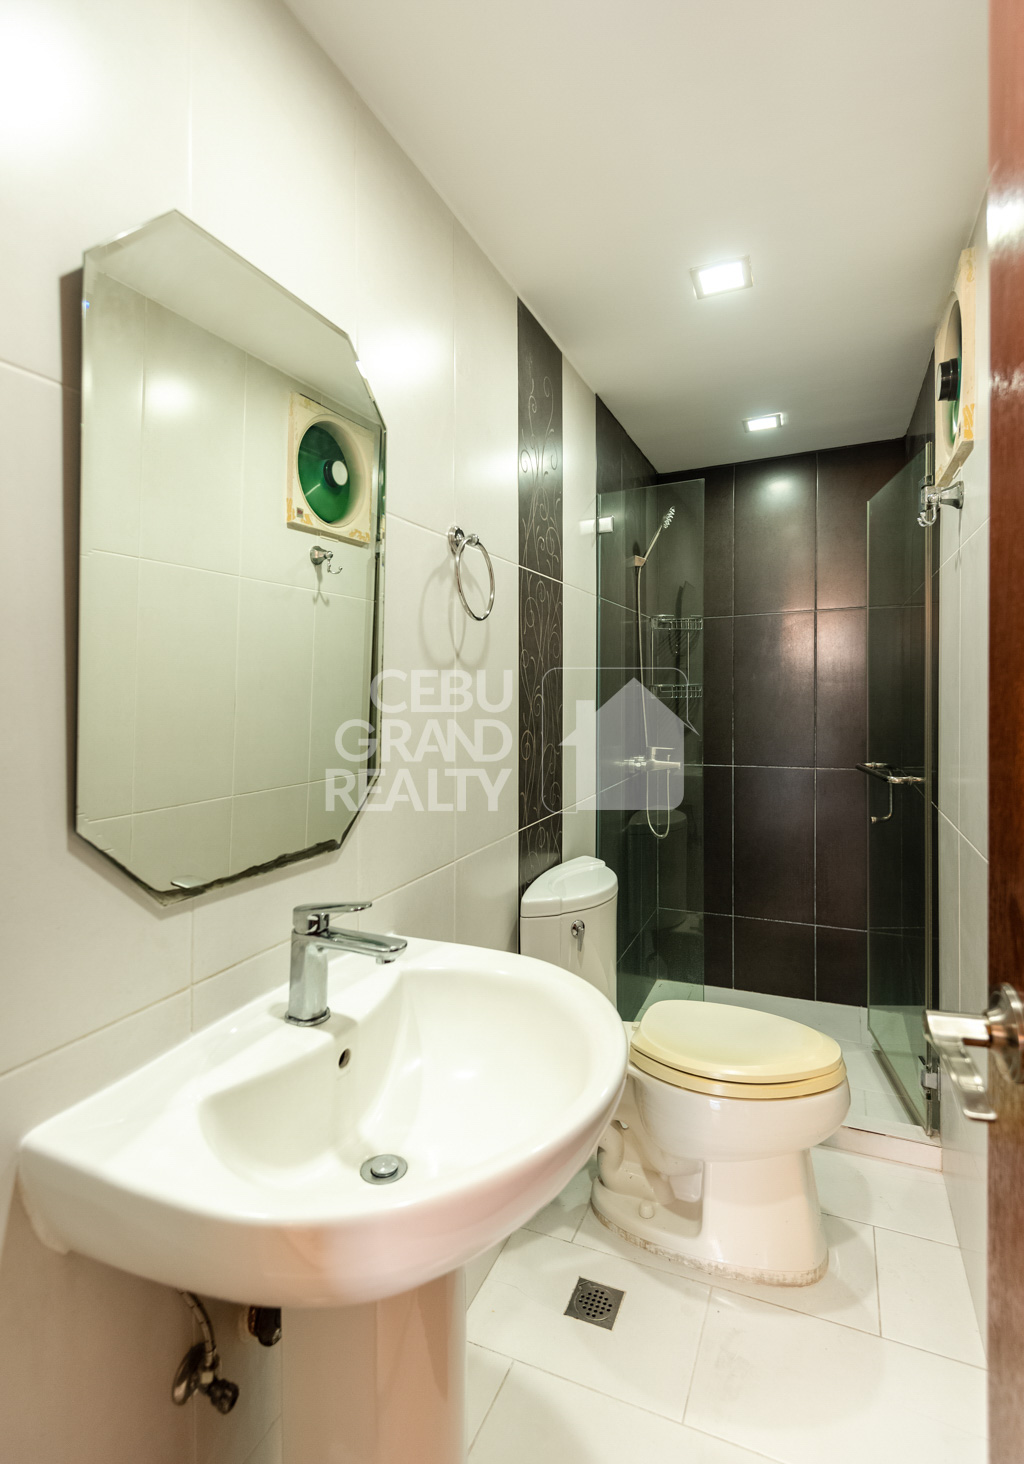 RCGS3 Furnished 2 Bedroom Condo for Rent in Banilad Cebu - 15